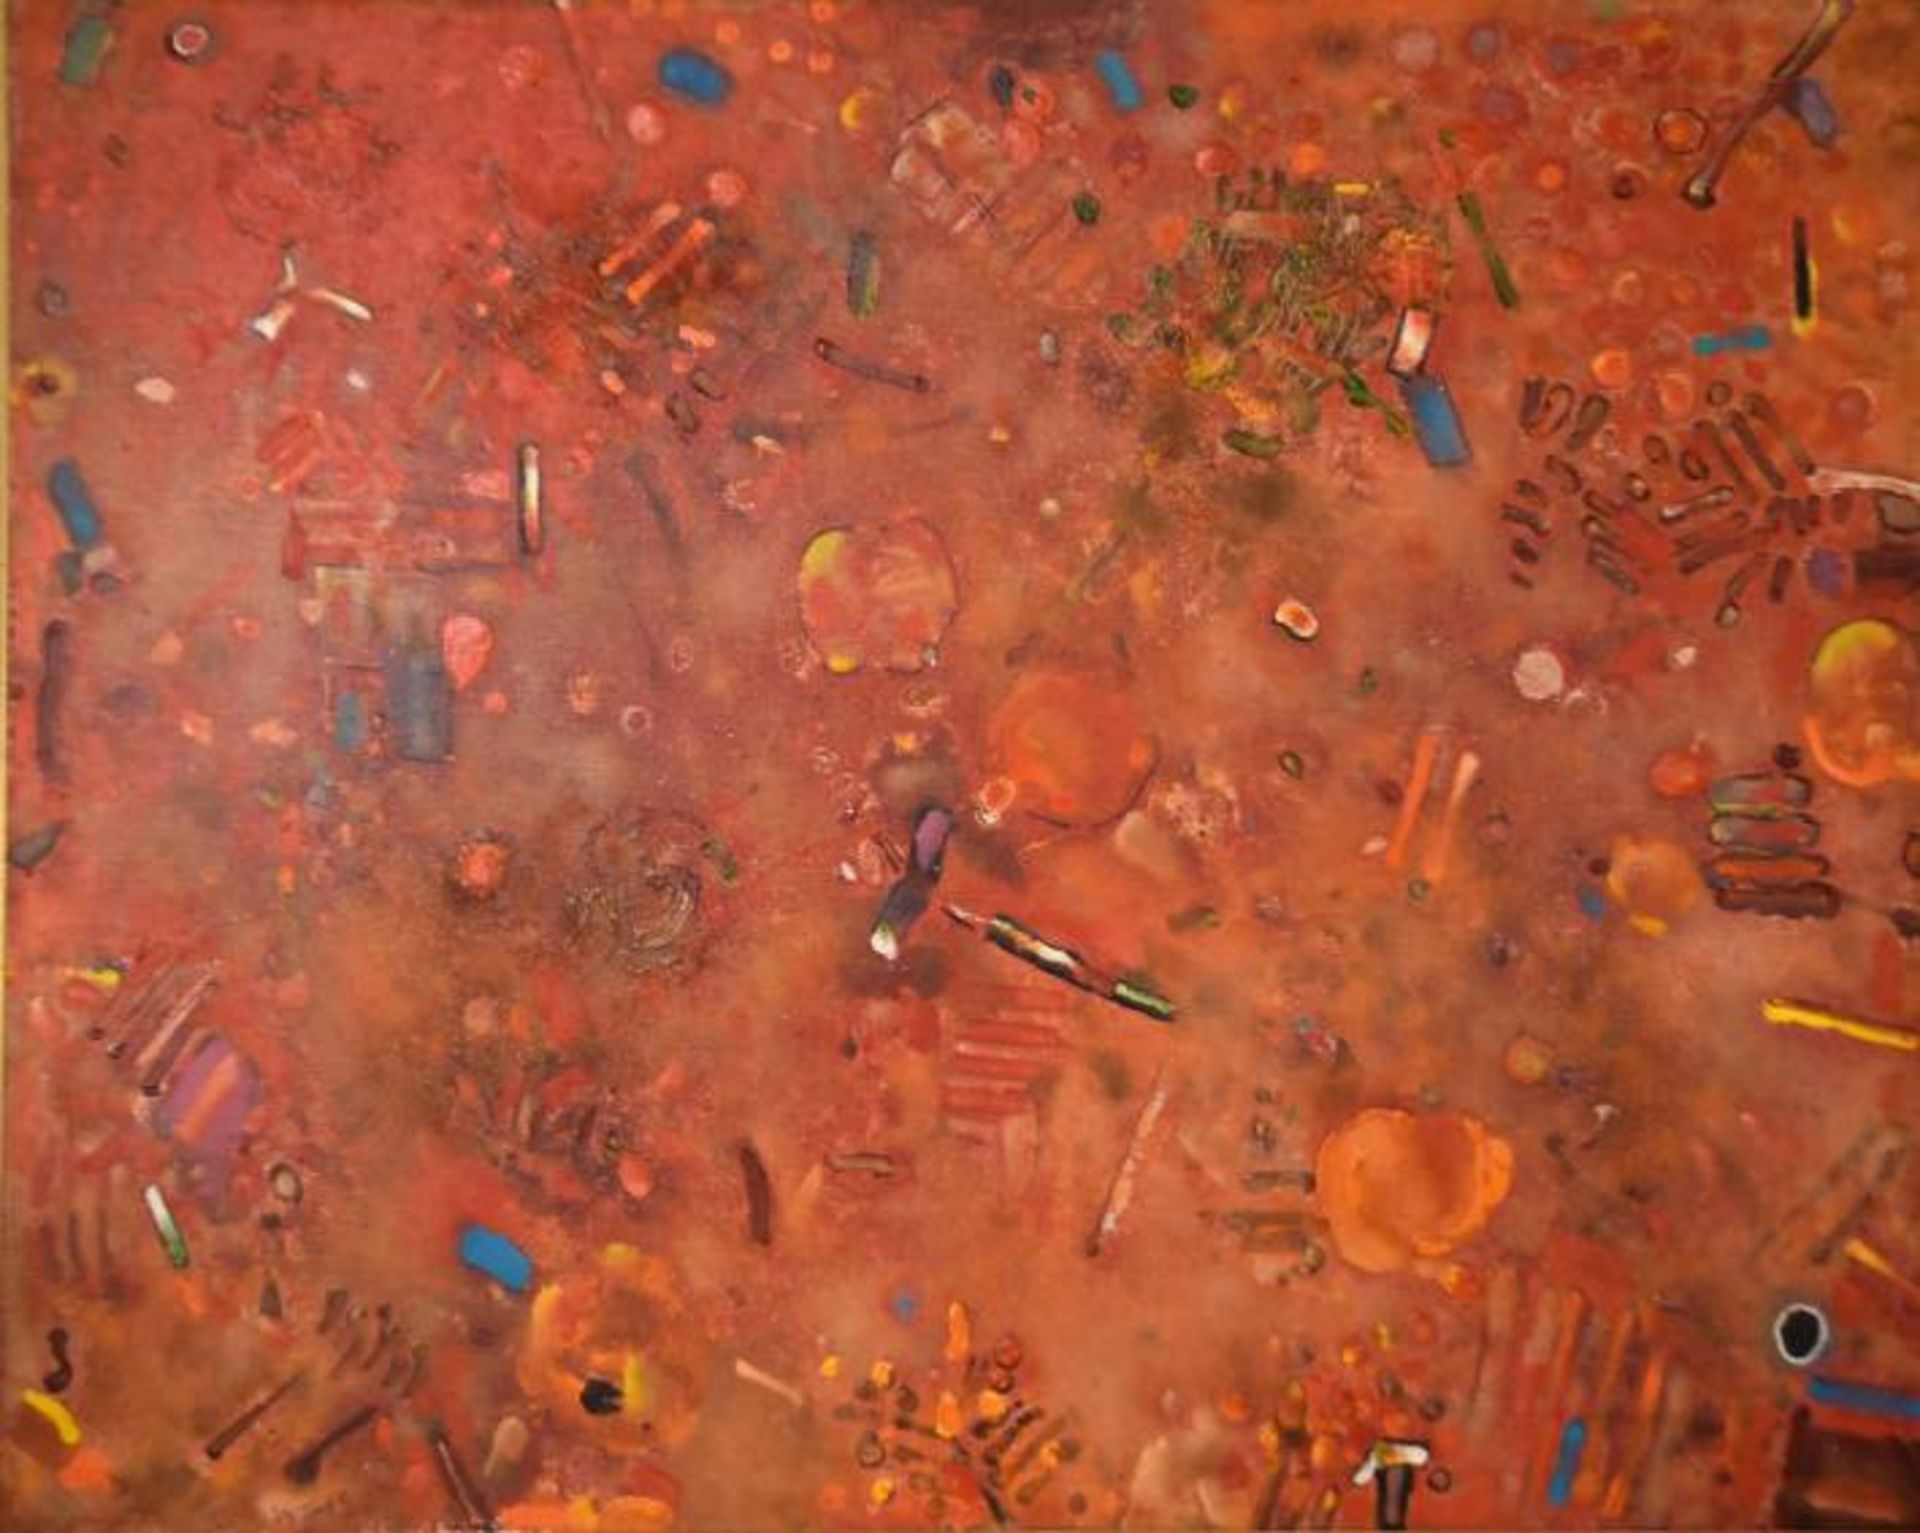 DIMOV Ivan (20. Jahrhundert) "Herbst in Rot", abstrakte Komposition, Ölgemälde auf Leinwand, - Bild 3 aus 7